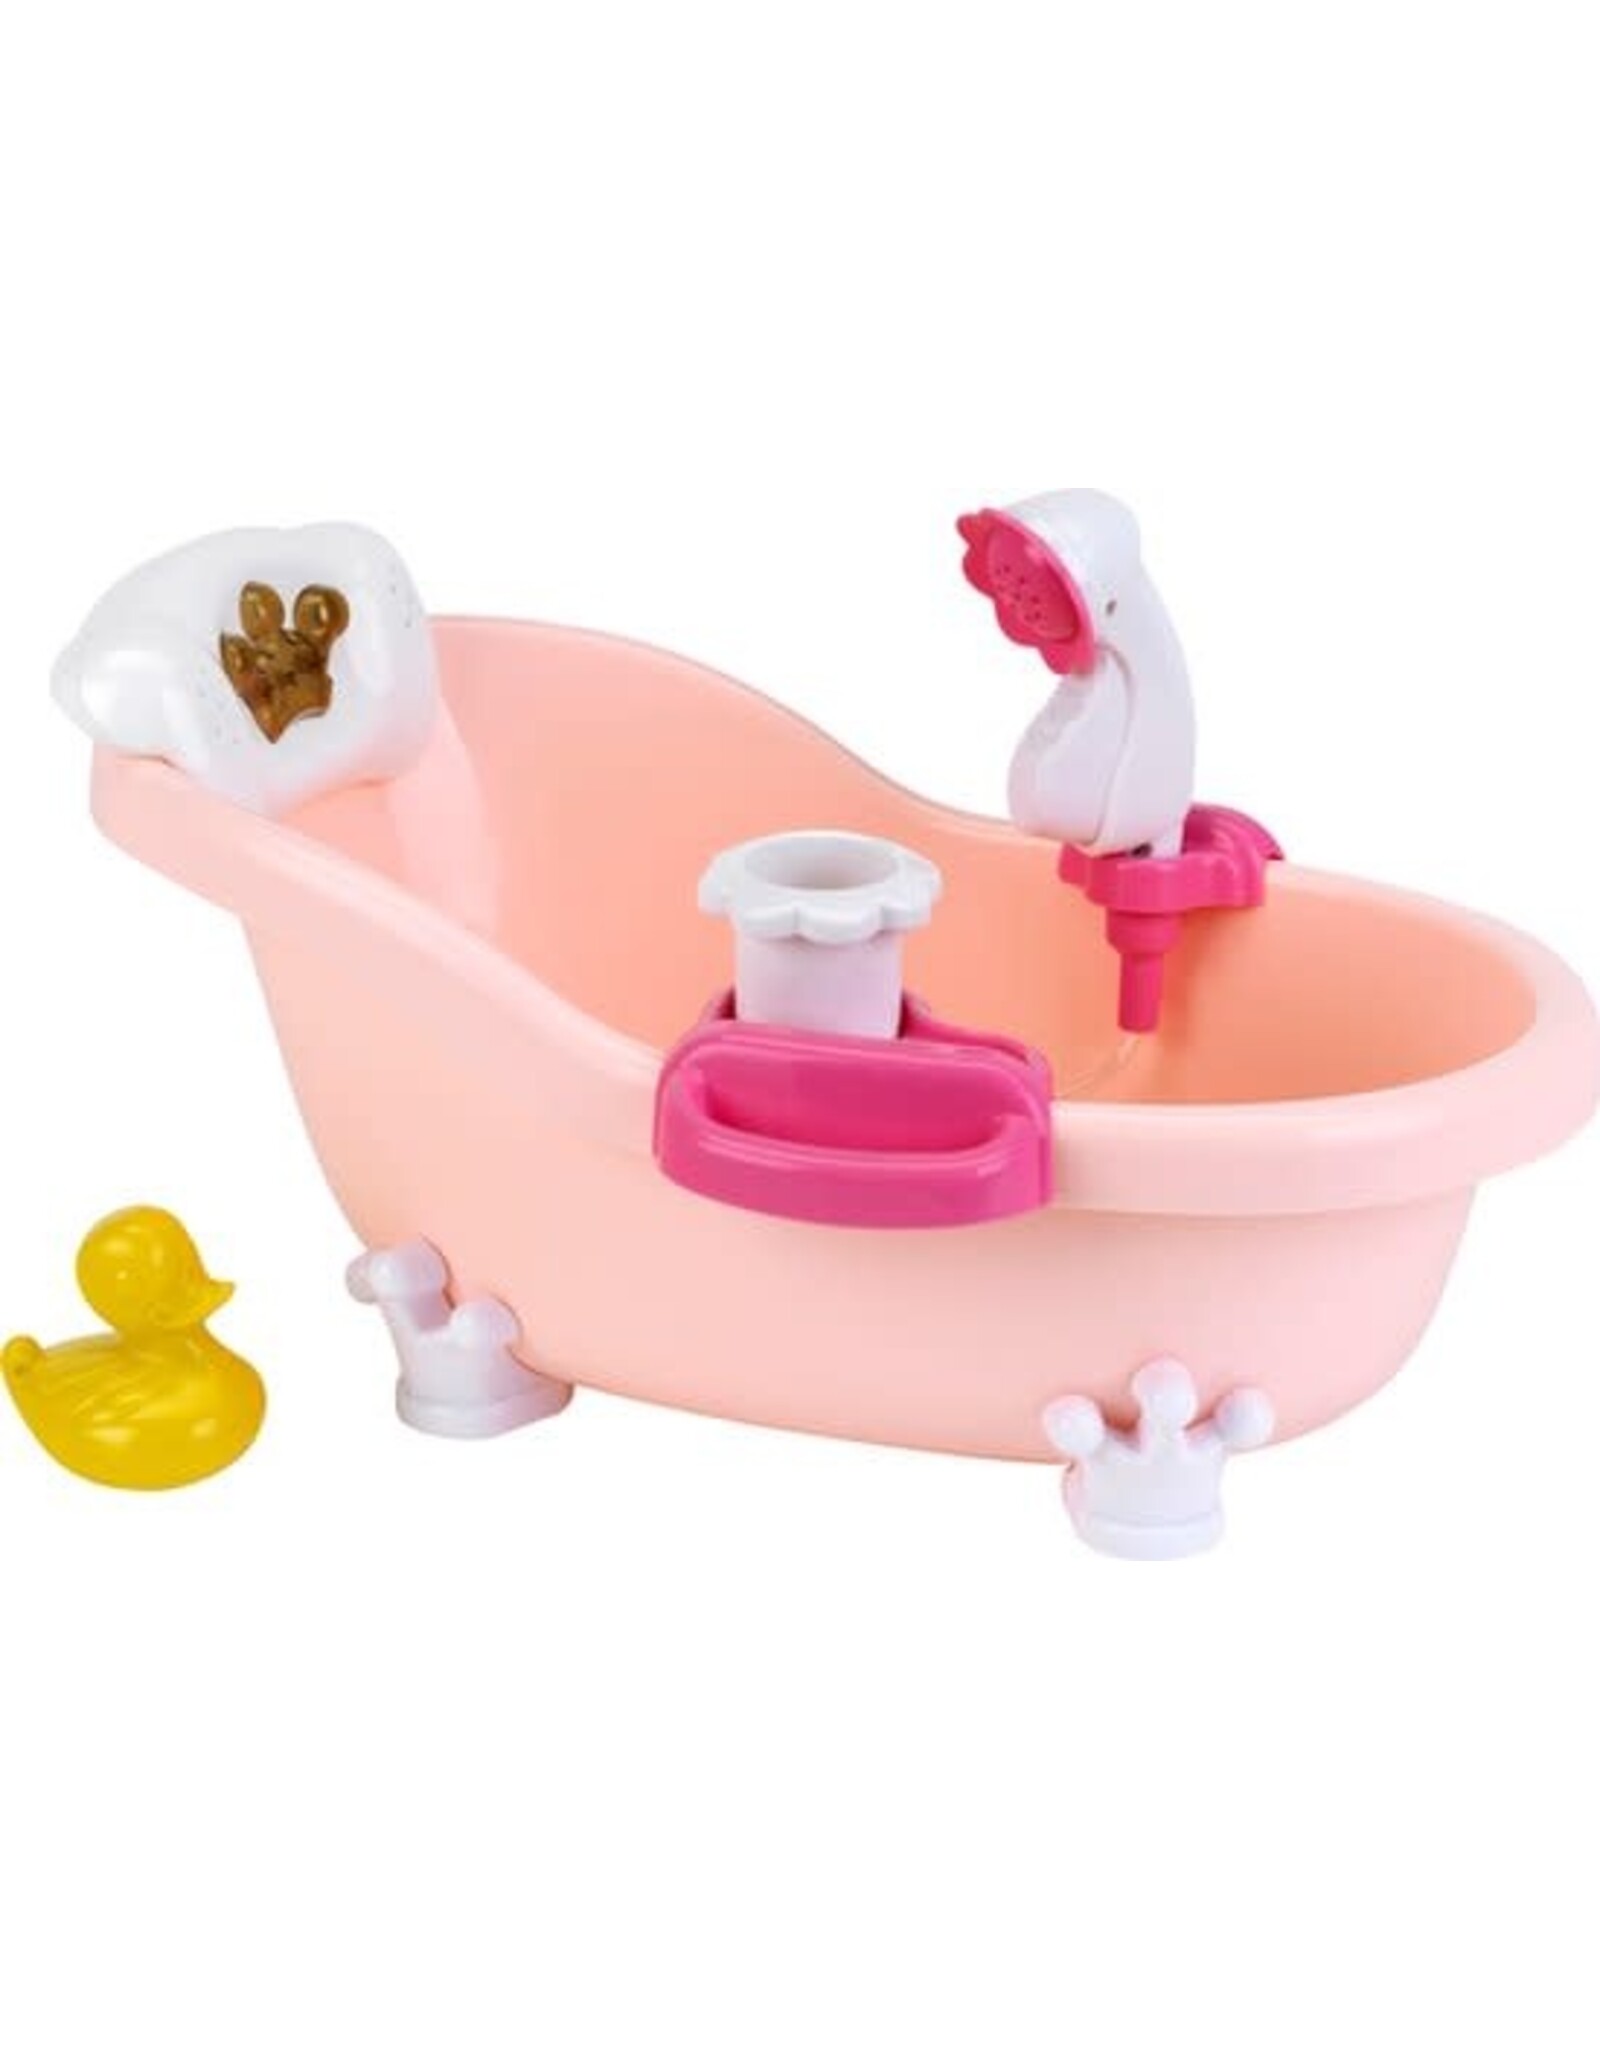 Klein Klein Toys Baby Coralie speelgoed pop bad - incl. accessoires - incl. licht - incl. geluid - roze